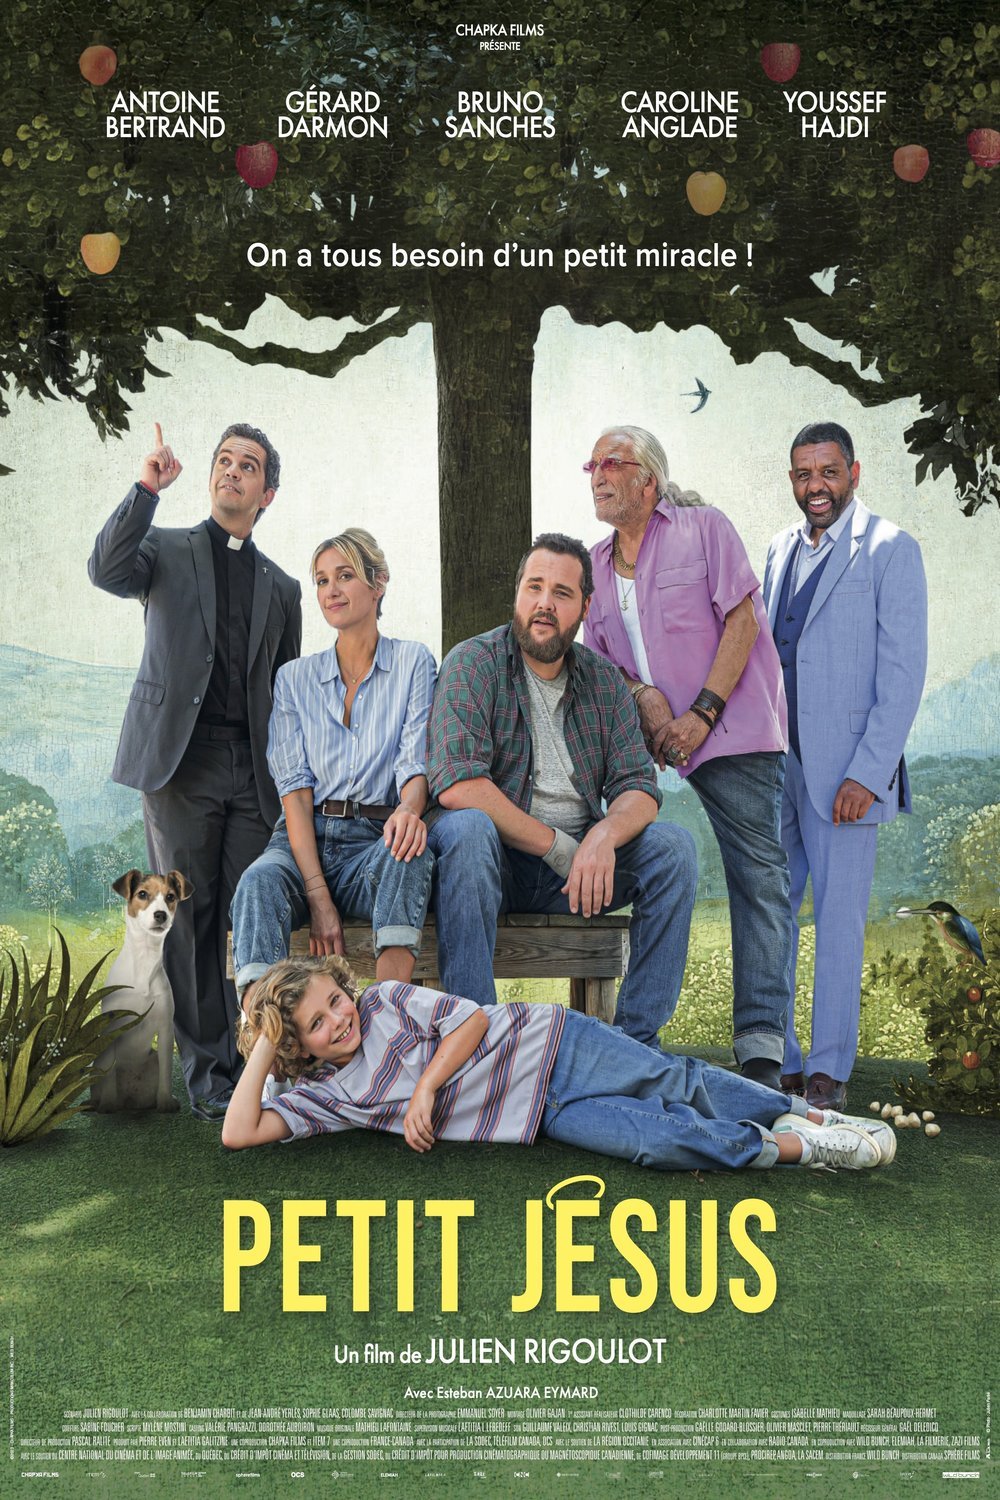 Poster of the movie Petit Jésus